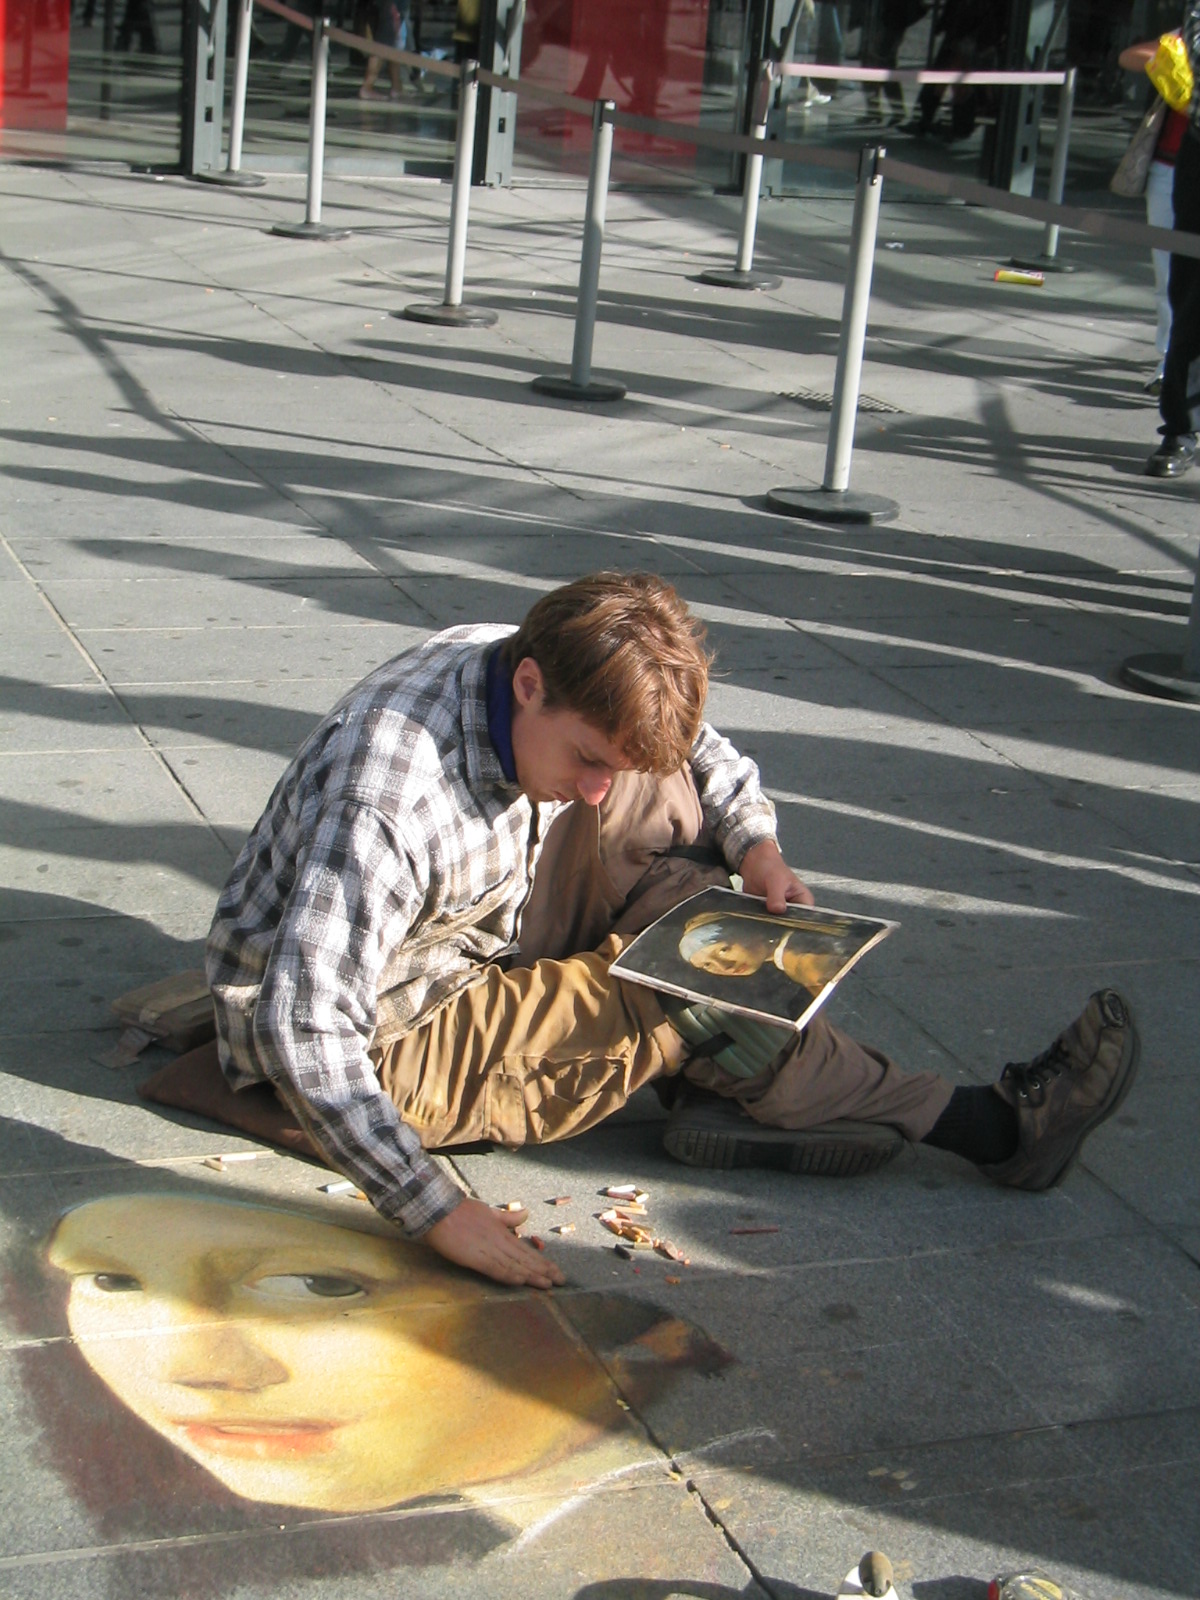 File:Street artist Centre Pompidou.jpg - Wikimedia Commons